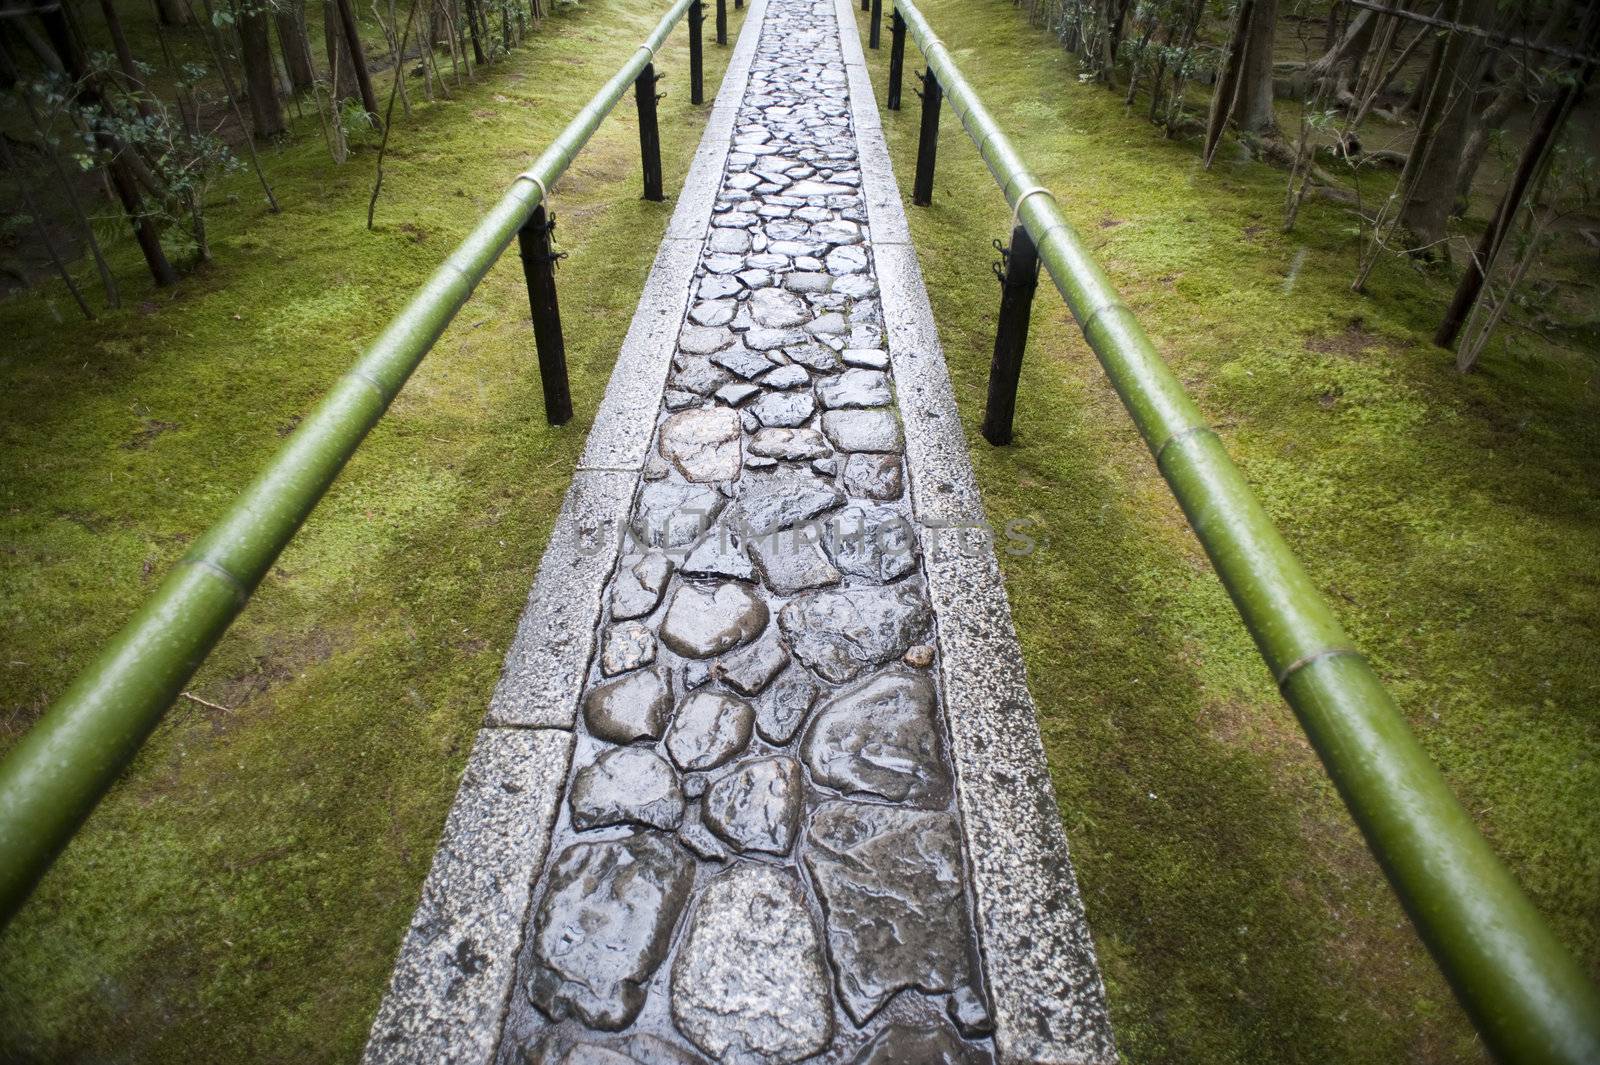 Stone path at Koto-in sub temple of Daitoku-ji in Kyoto, Japan